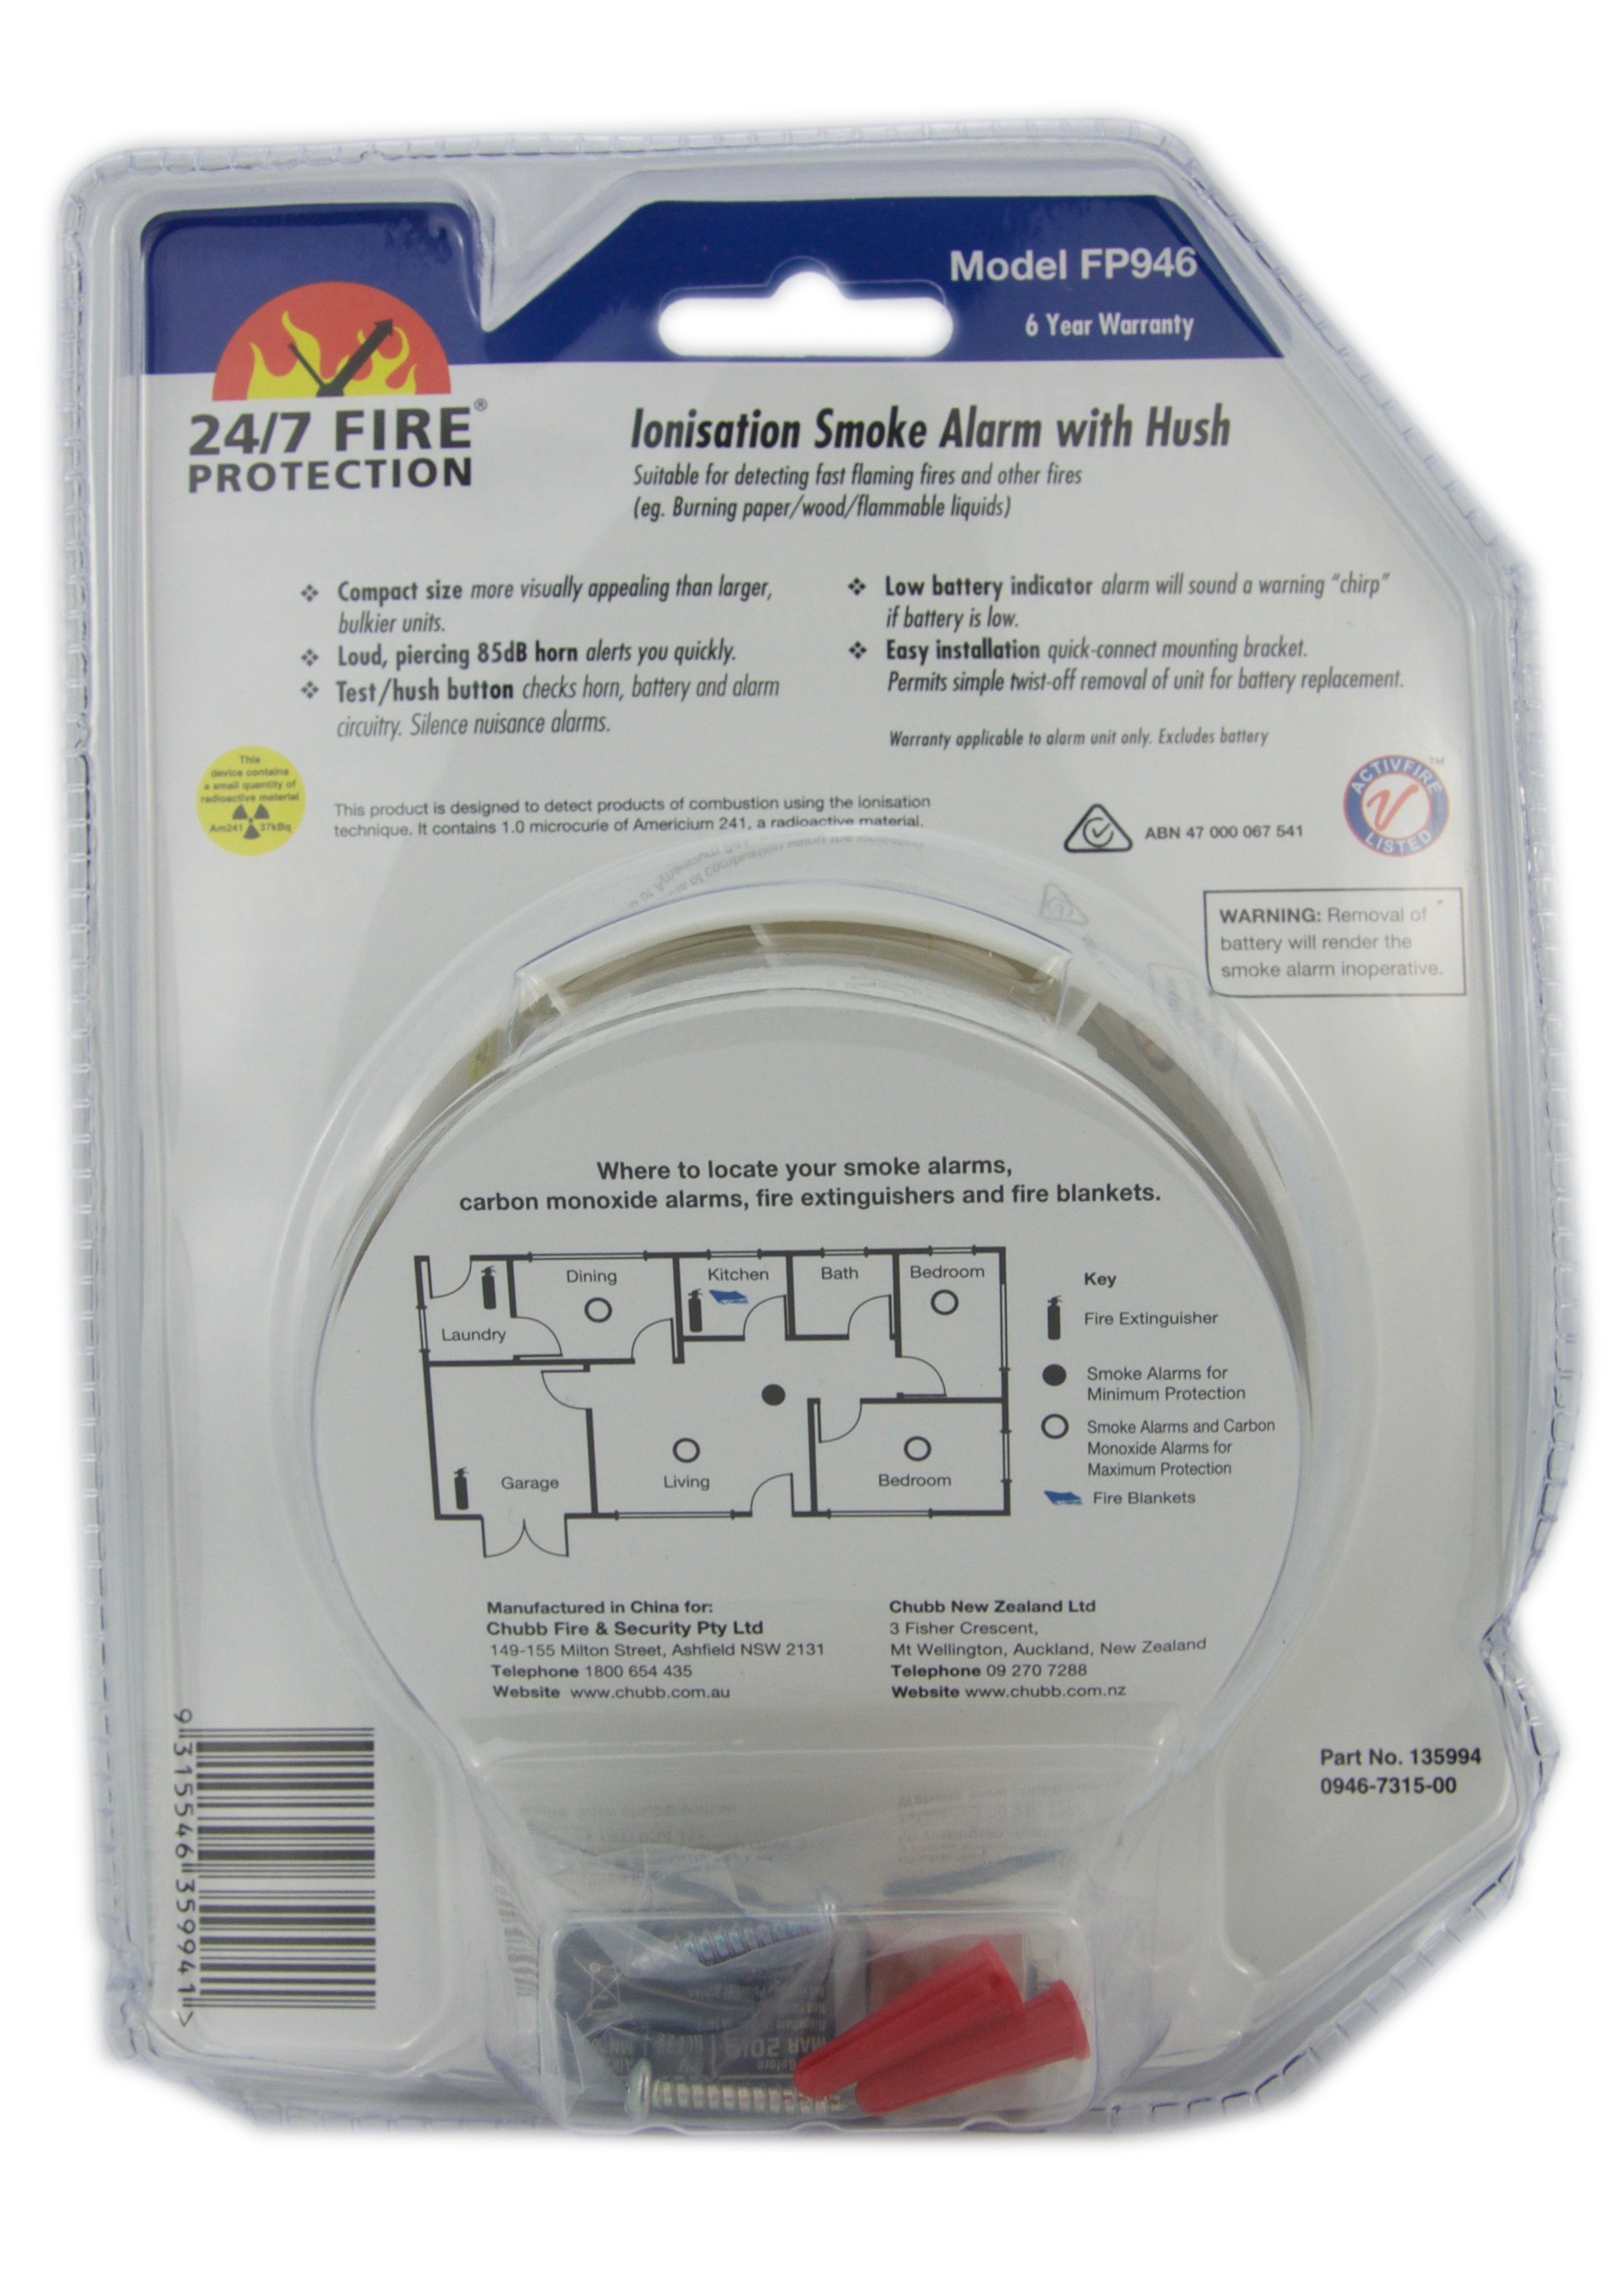 24/7 Fire Protection Ionisation Smoke Alarm with Hush FP946